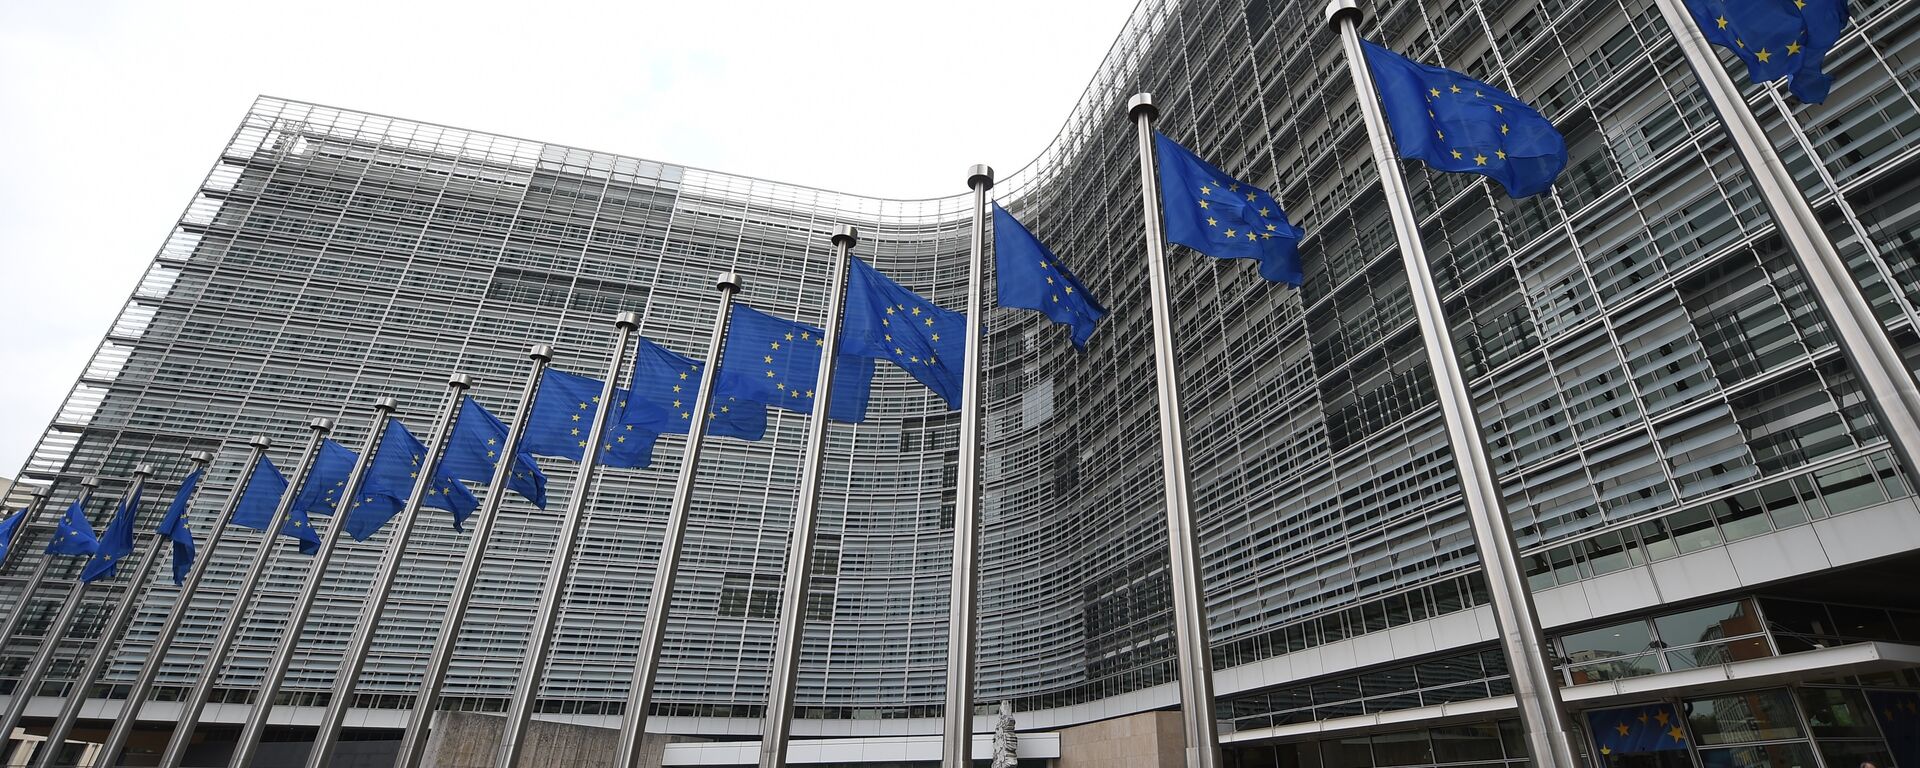 Флаги ЕС на фоне здания Европейской комиссии в Брюсселе. - Sputnik Молдова, 1920, 14.04.2021